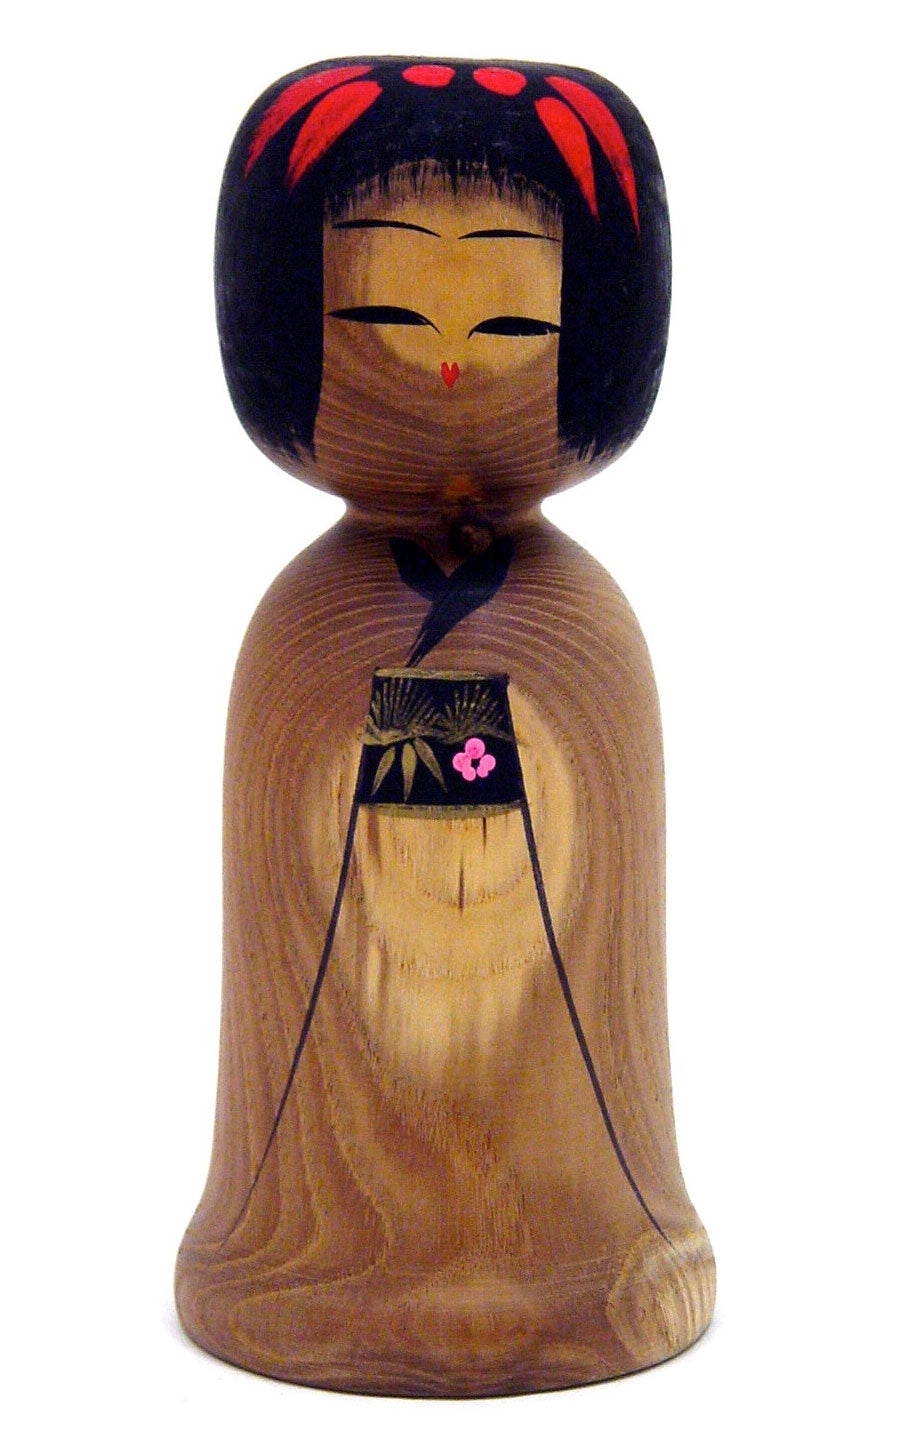 Sosaku Kokeshi by Matagoro, Kiyomi entitled: "Sho-Chiku-Bai | Good Luck"